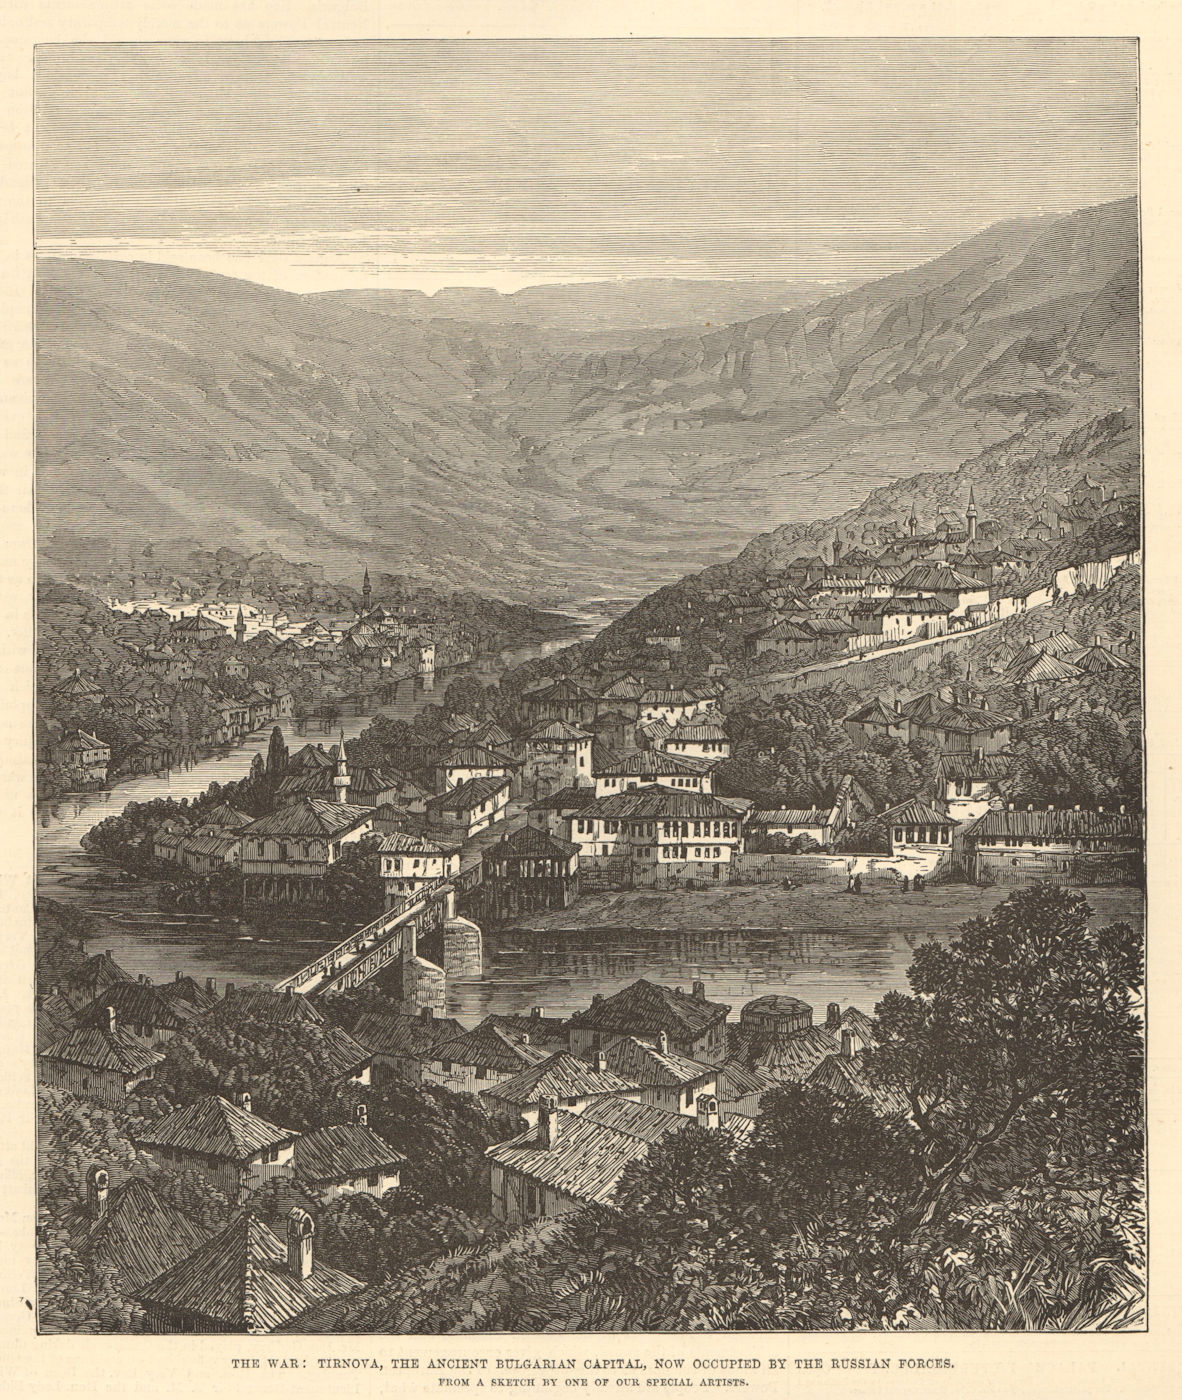 Veliko Tarnovo (Tirnova) ancient Bulgarian capital occupied by Russian army 1877